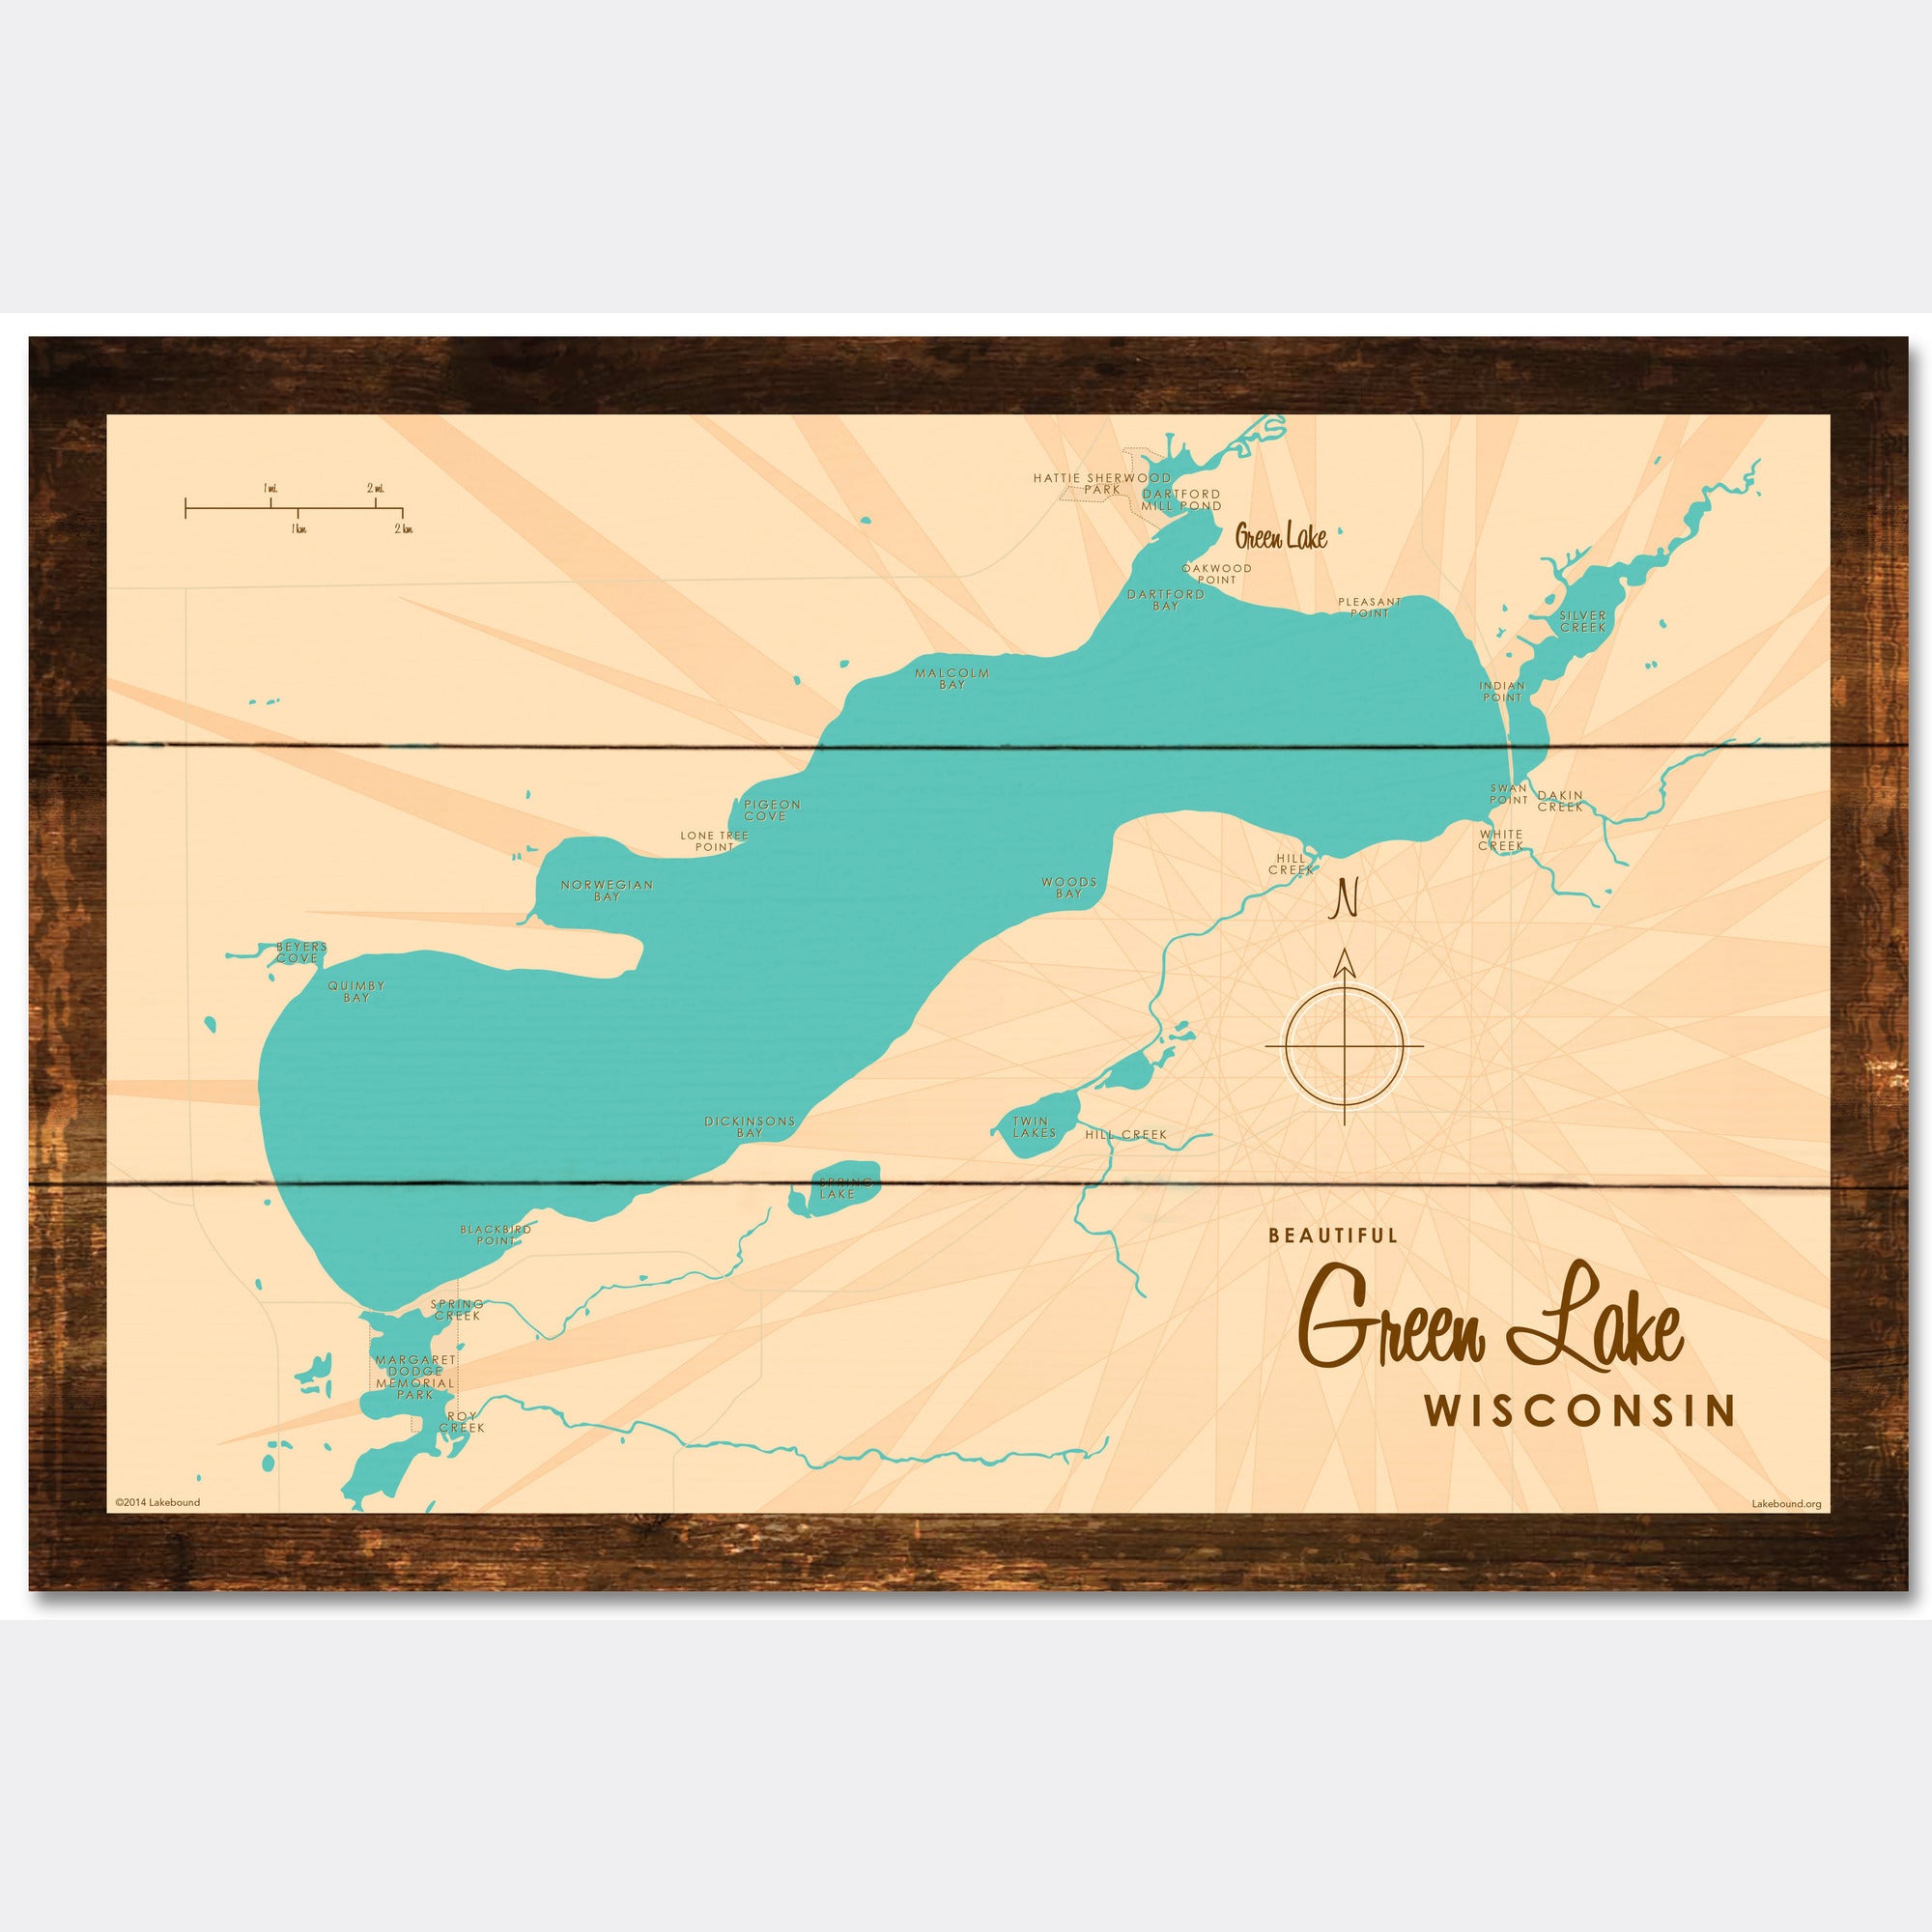 Green Lake Wisconsin, Rustic Wood Sign Map Art